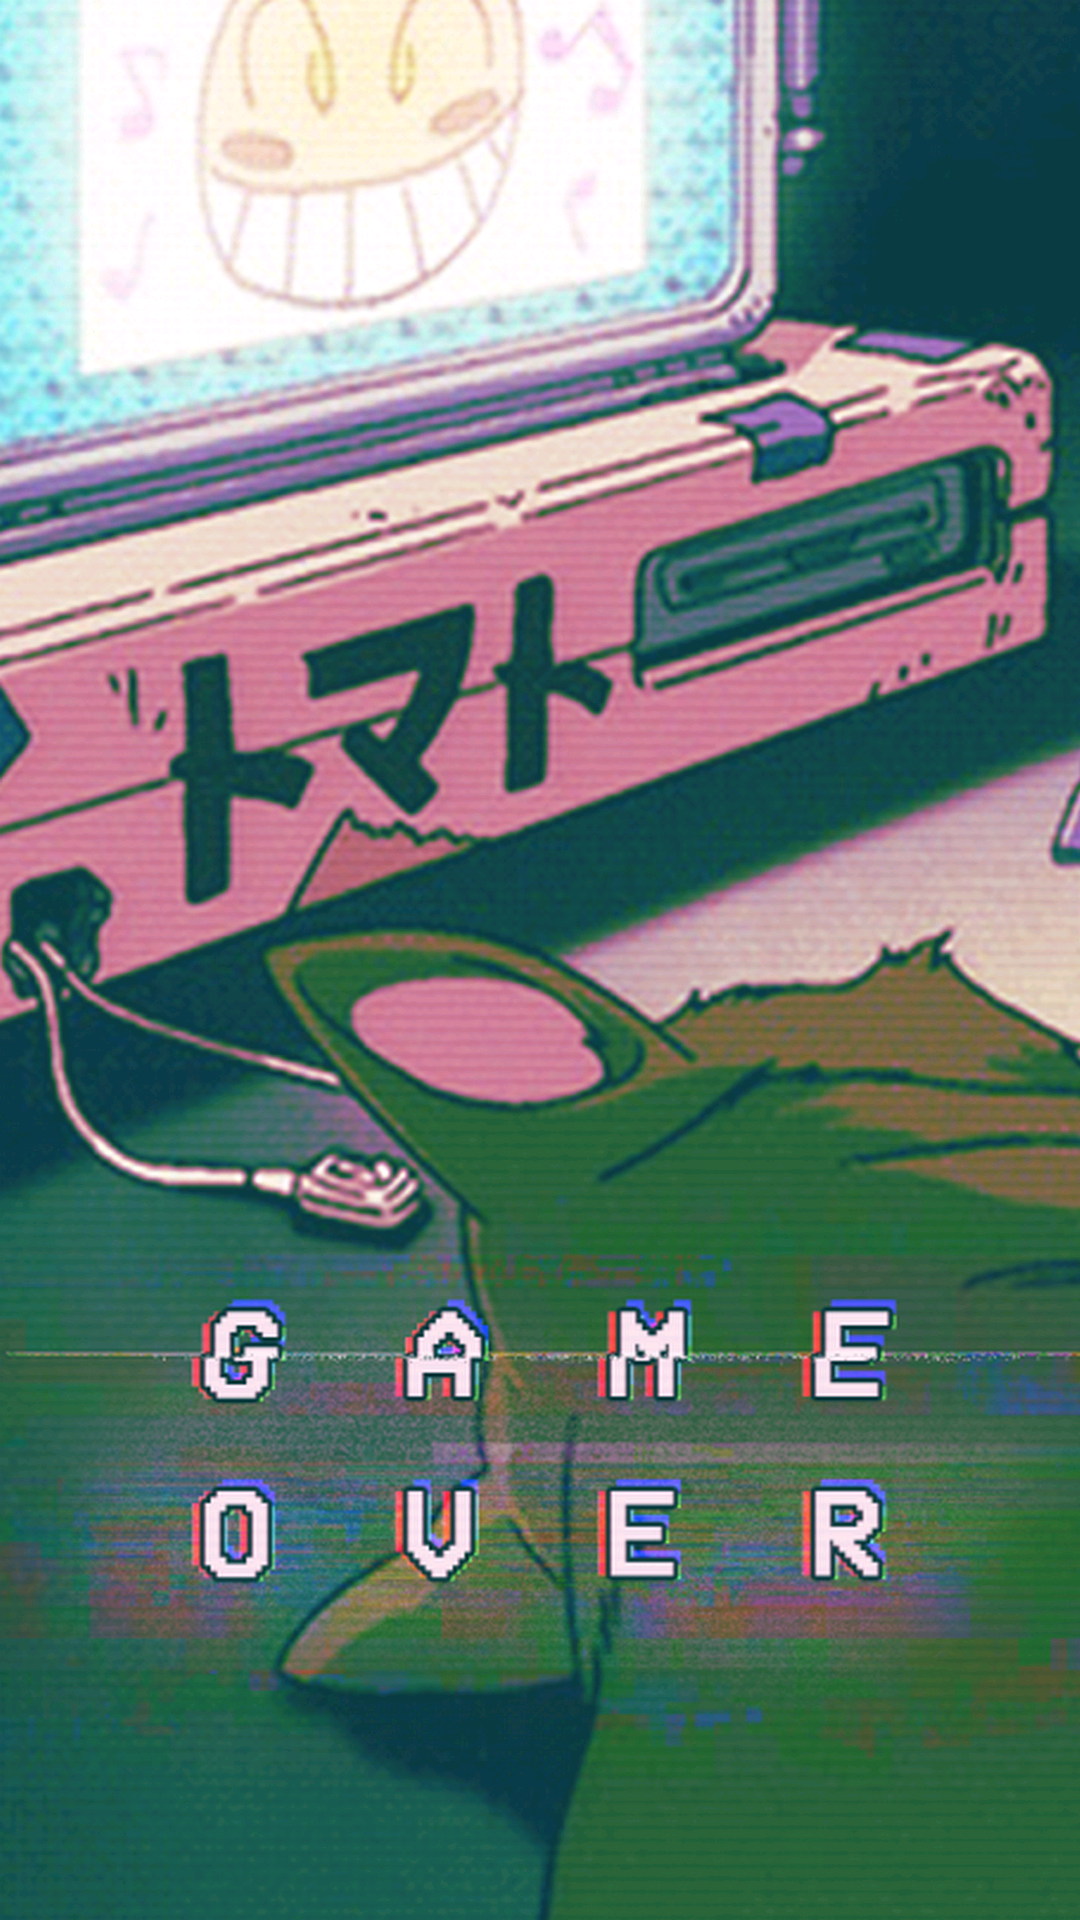 gameover. Vaporwave wallpaper, Tumblr iphone wallpaper, Aesthetic games